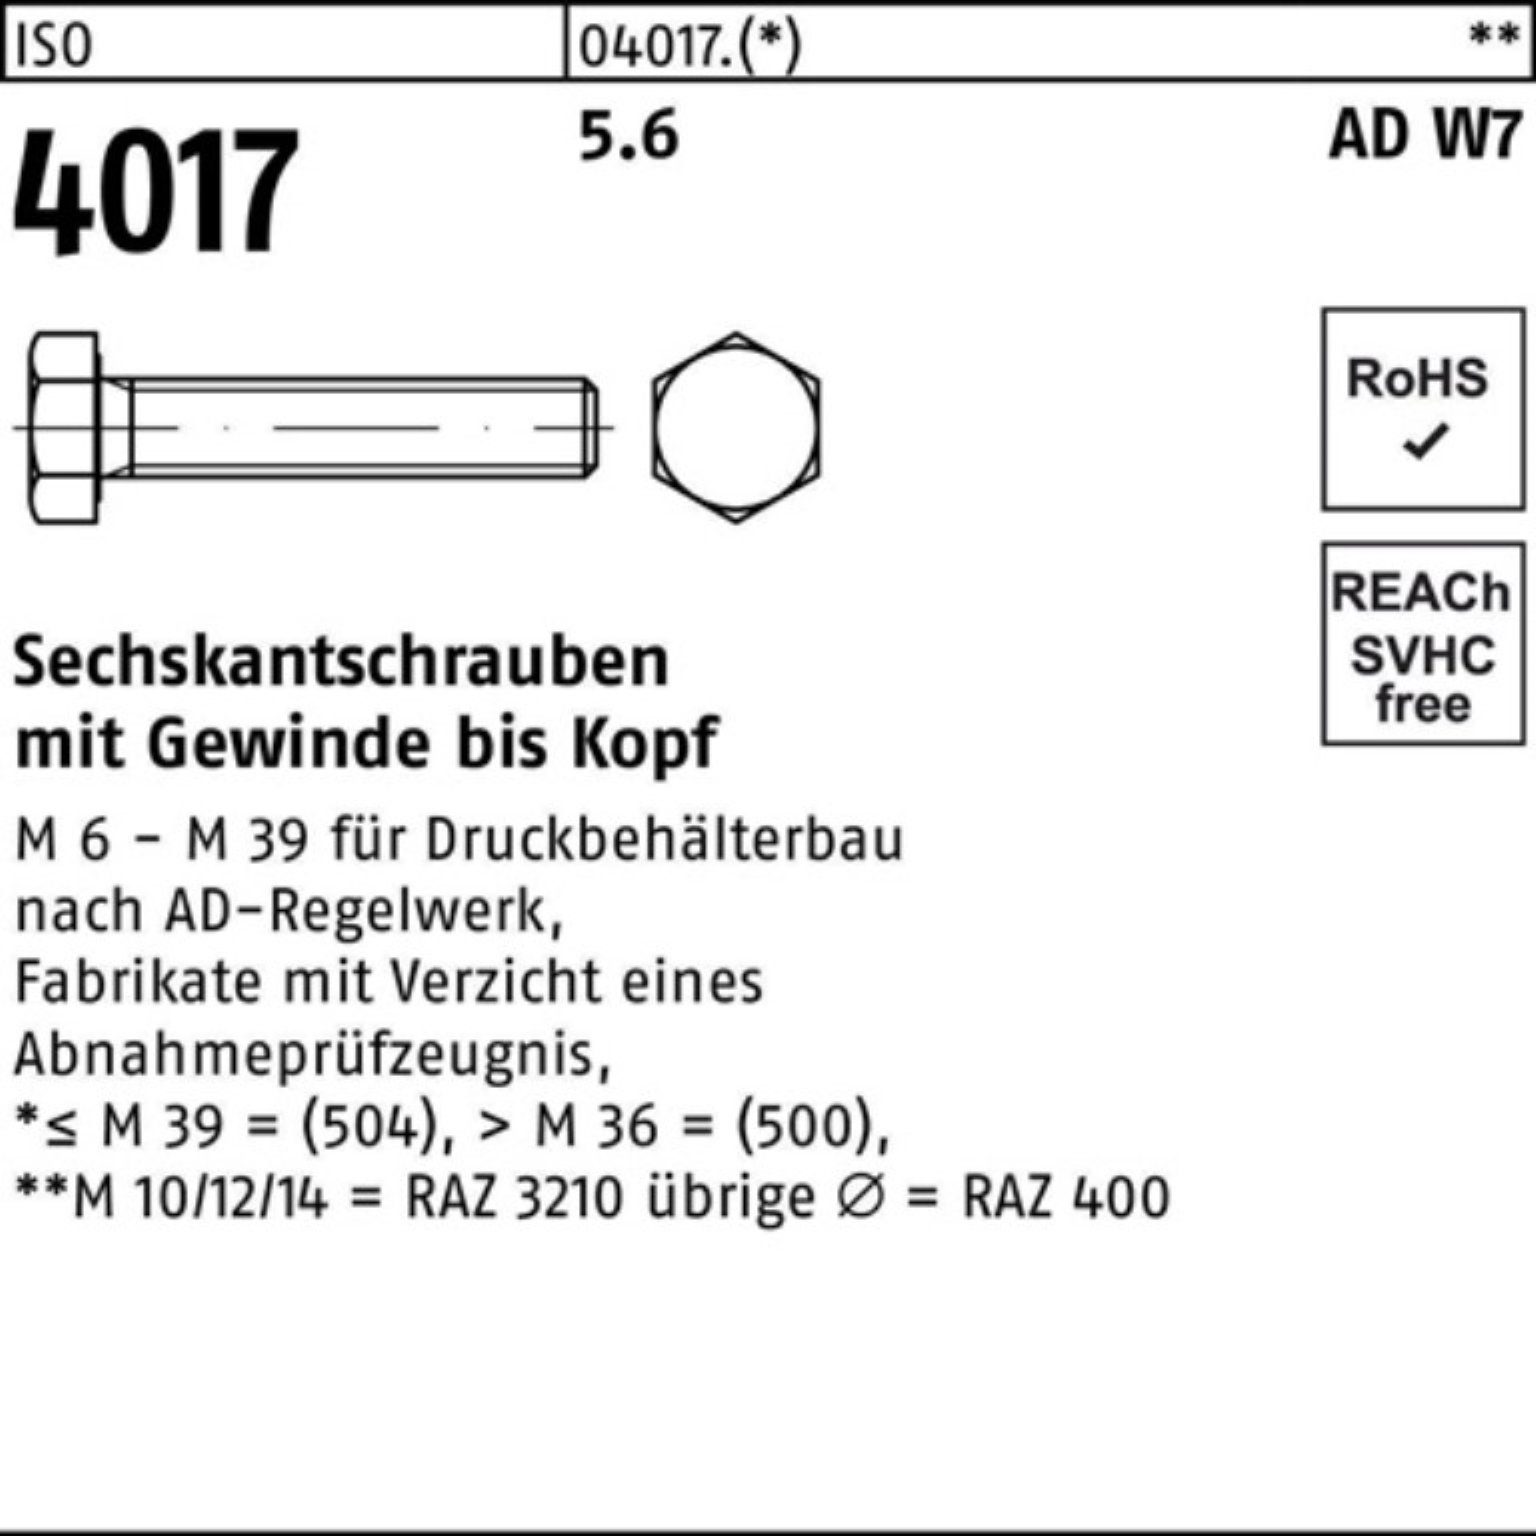 1 AD 100 W7 100er ISO I Stück 4017 Pack Sechskantschraube M27x Sechskantschraube 5.6 VG Bufab